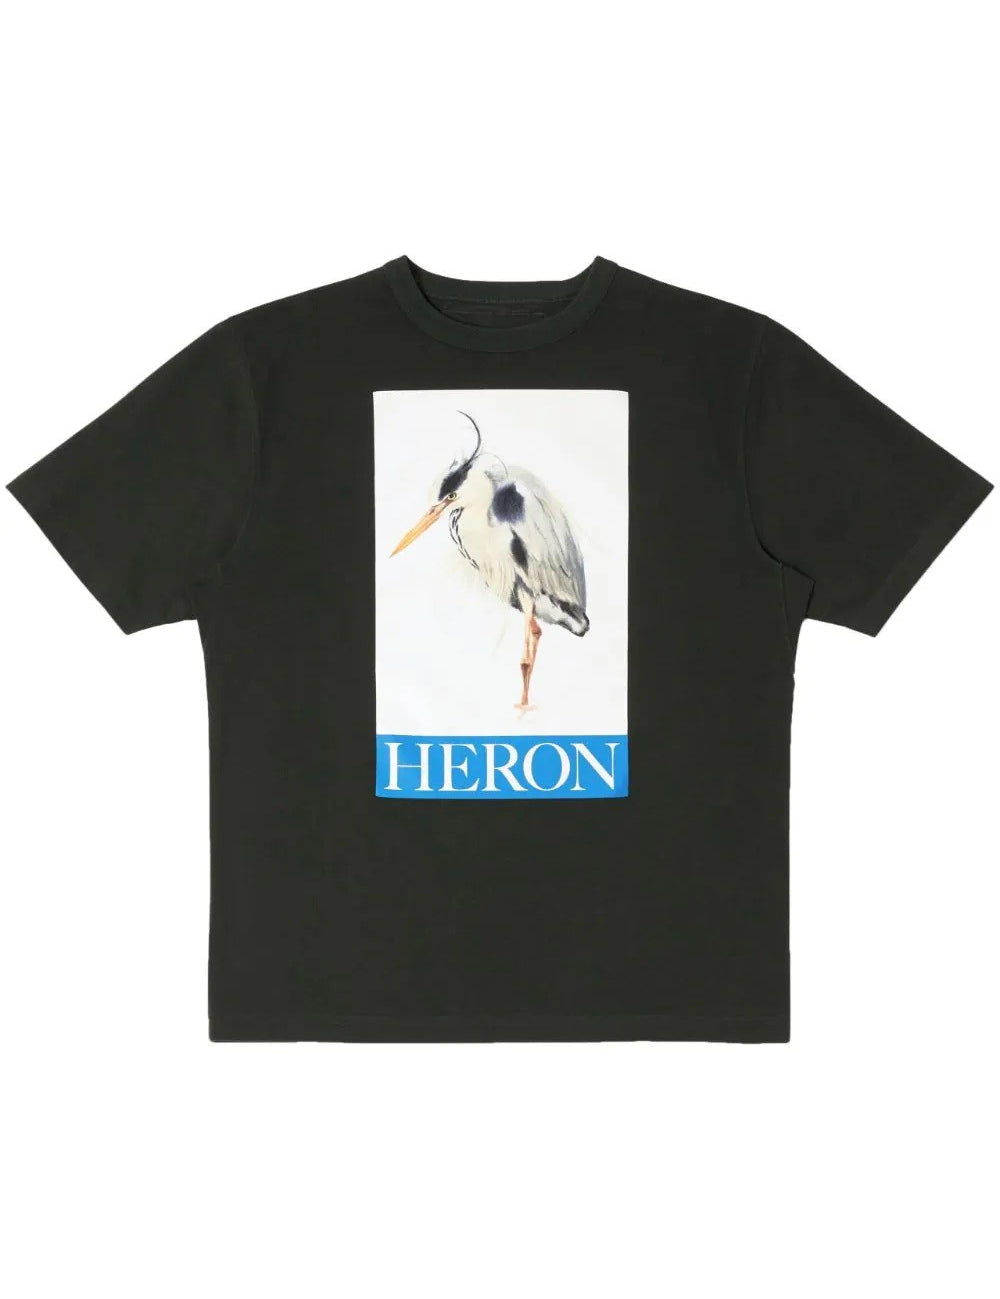 heron-bird-t-shirts.jpg